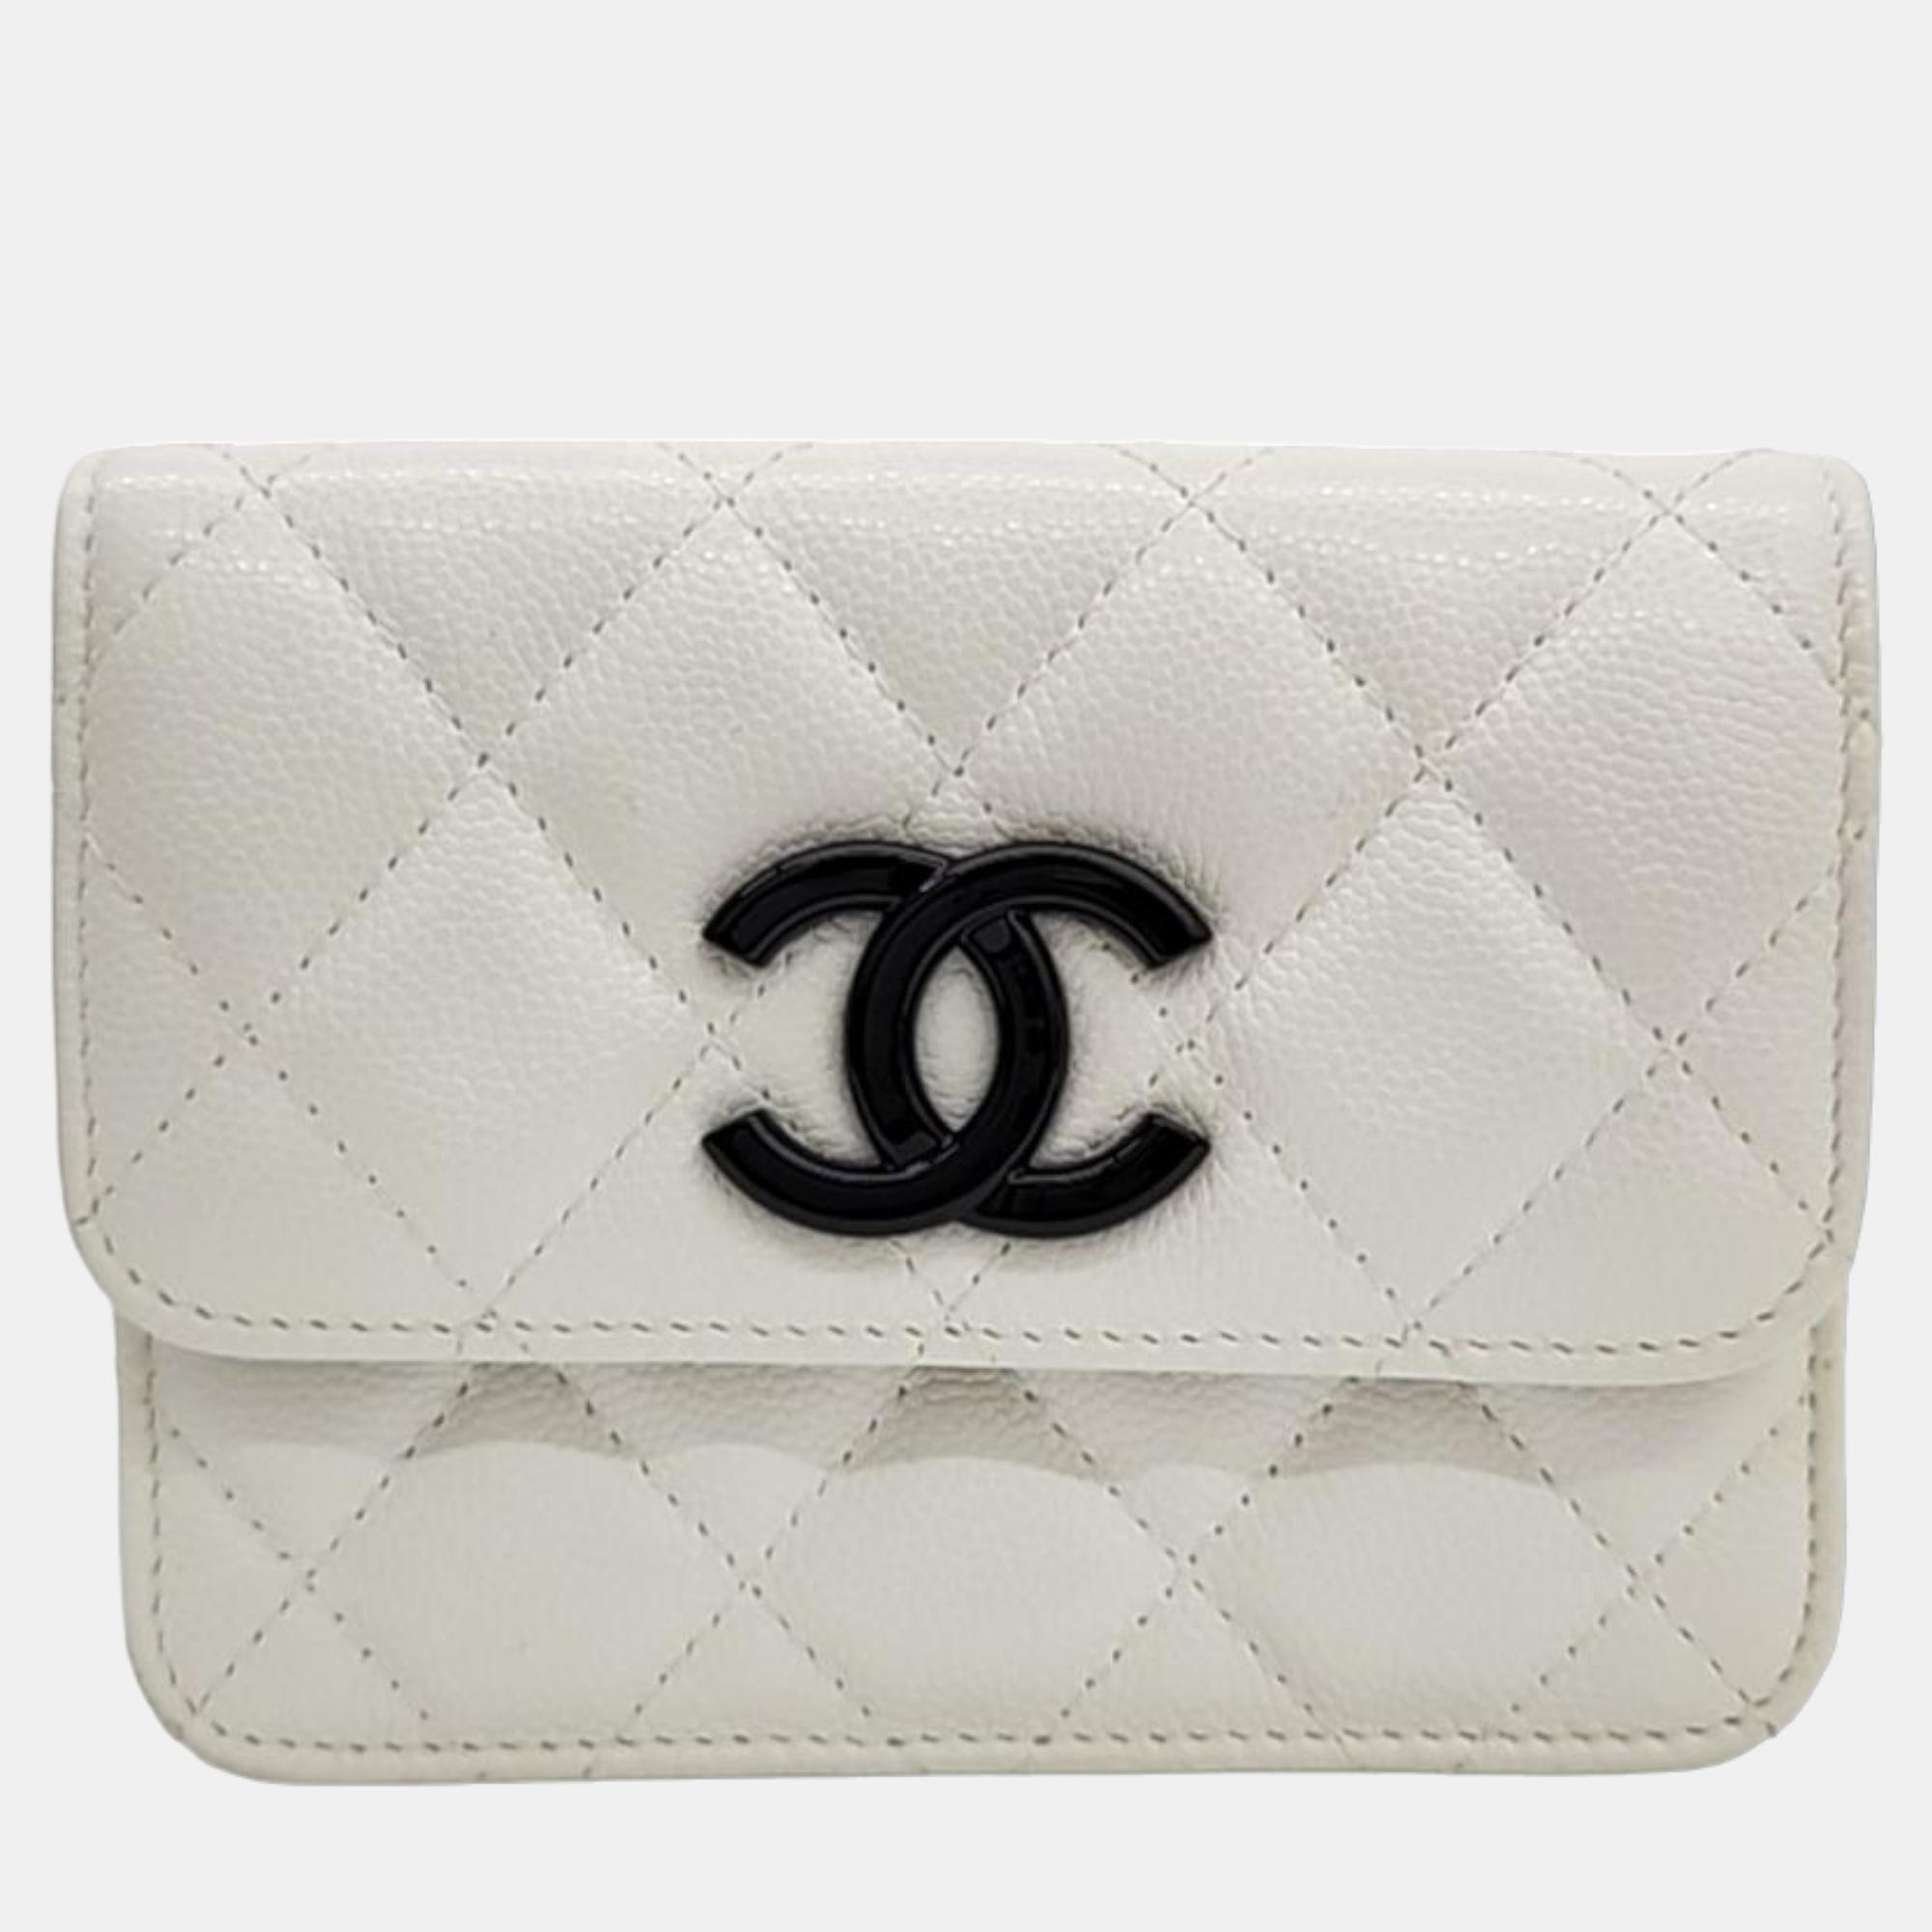 Chanel White Leather CC Belt Bag